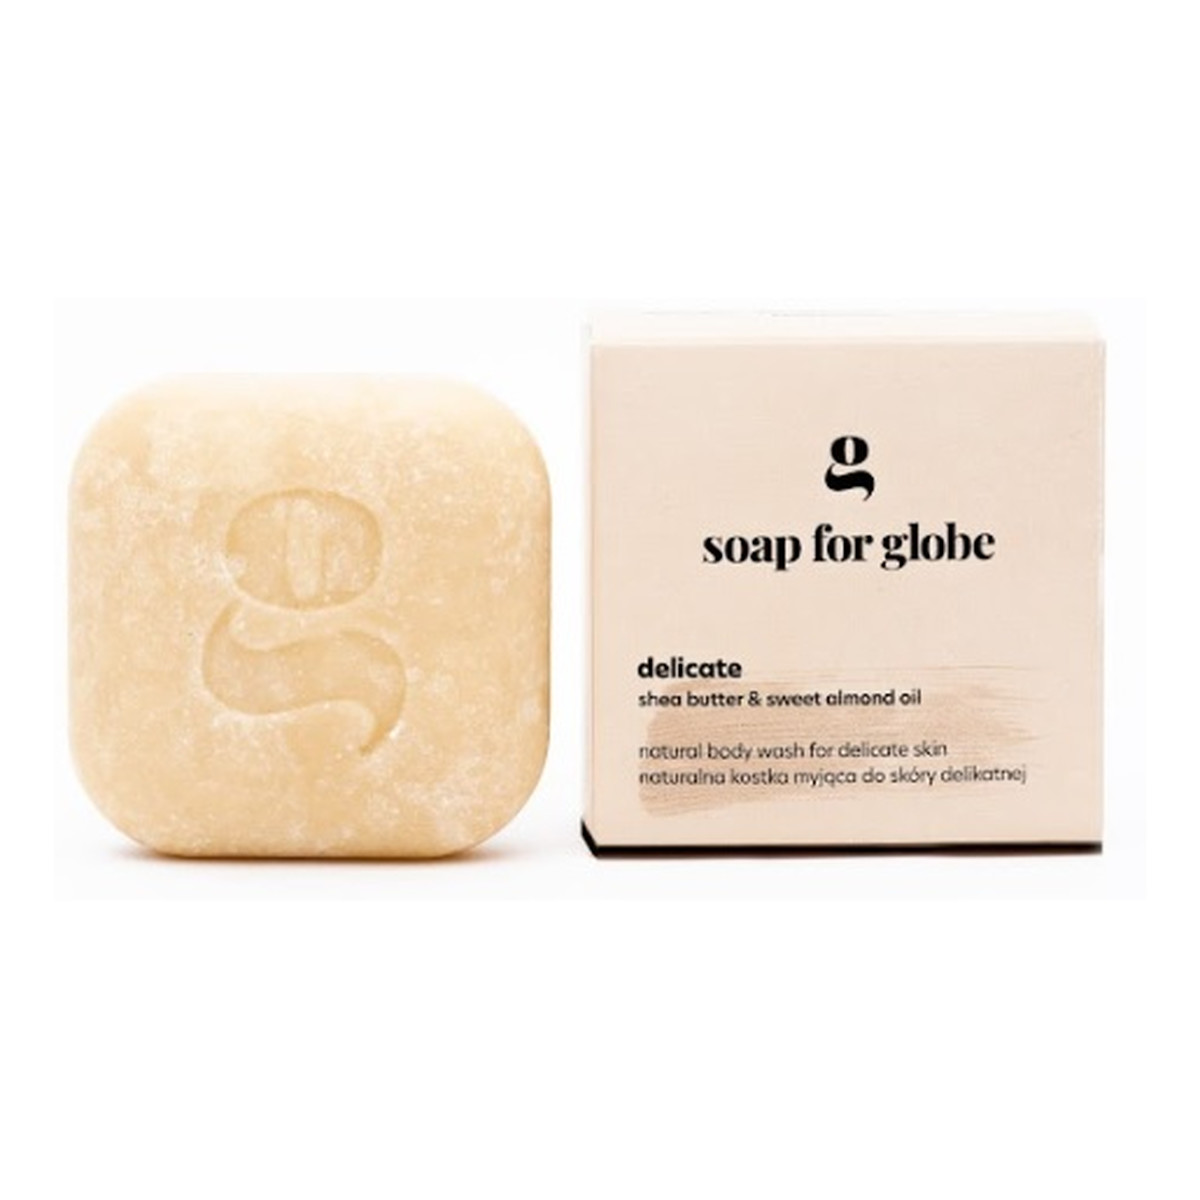 Soap for Globe Kostka myjąca do skóry delikatnej delicate 100g 100g